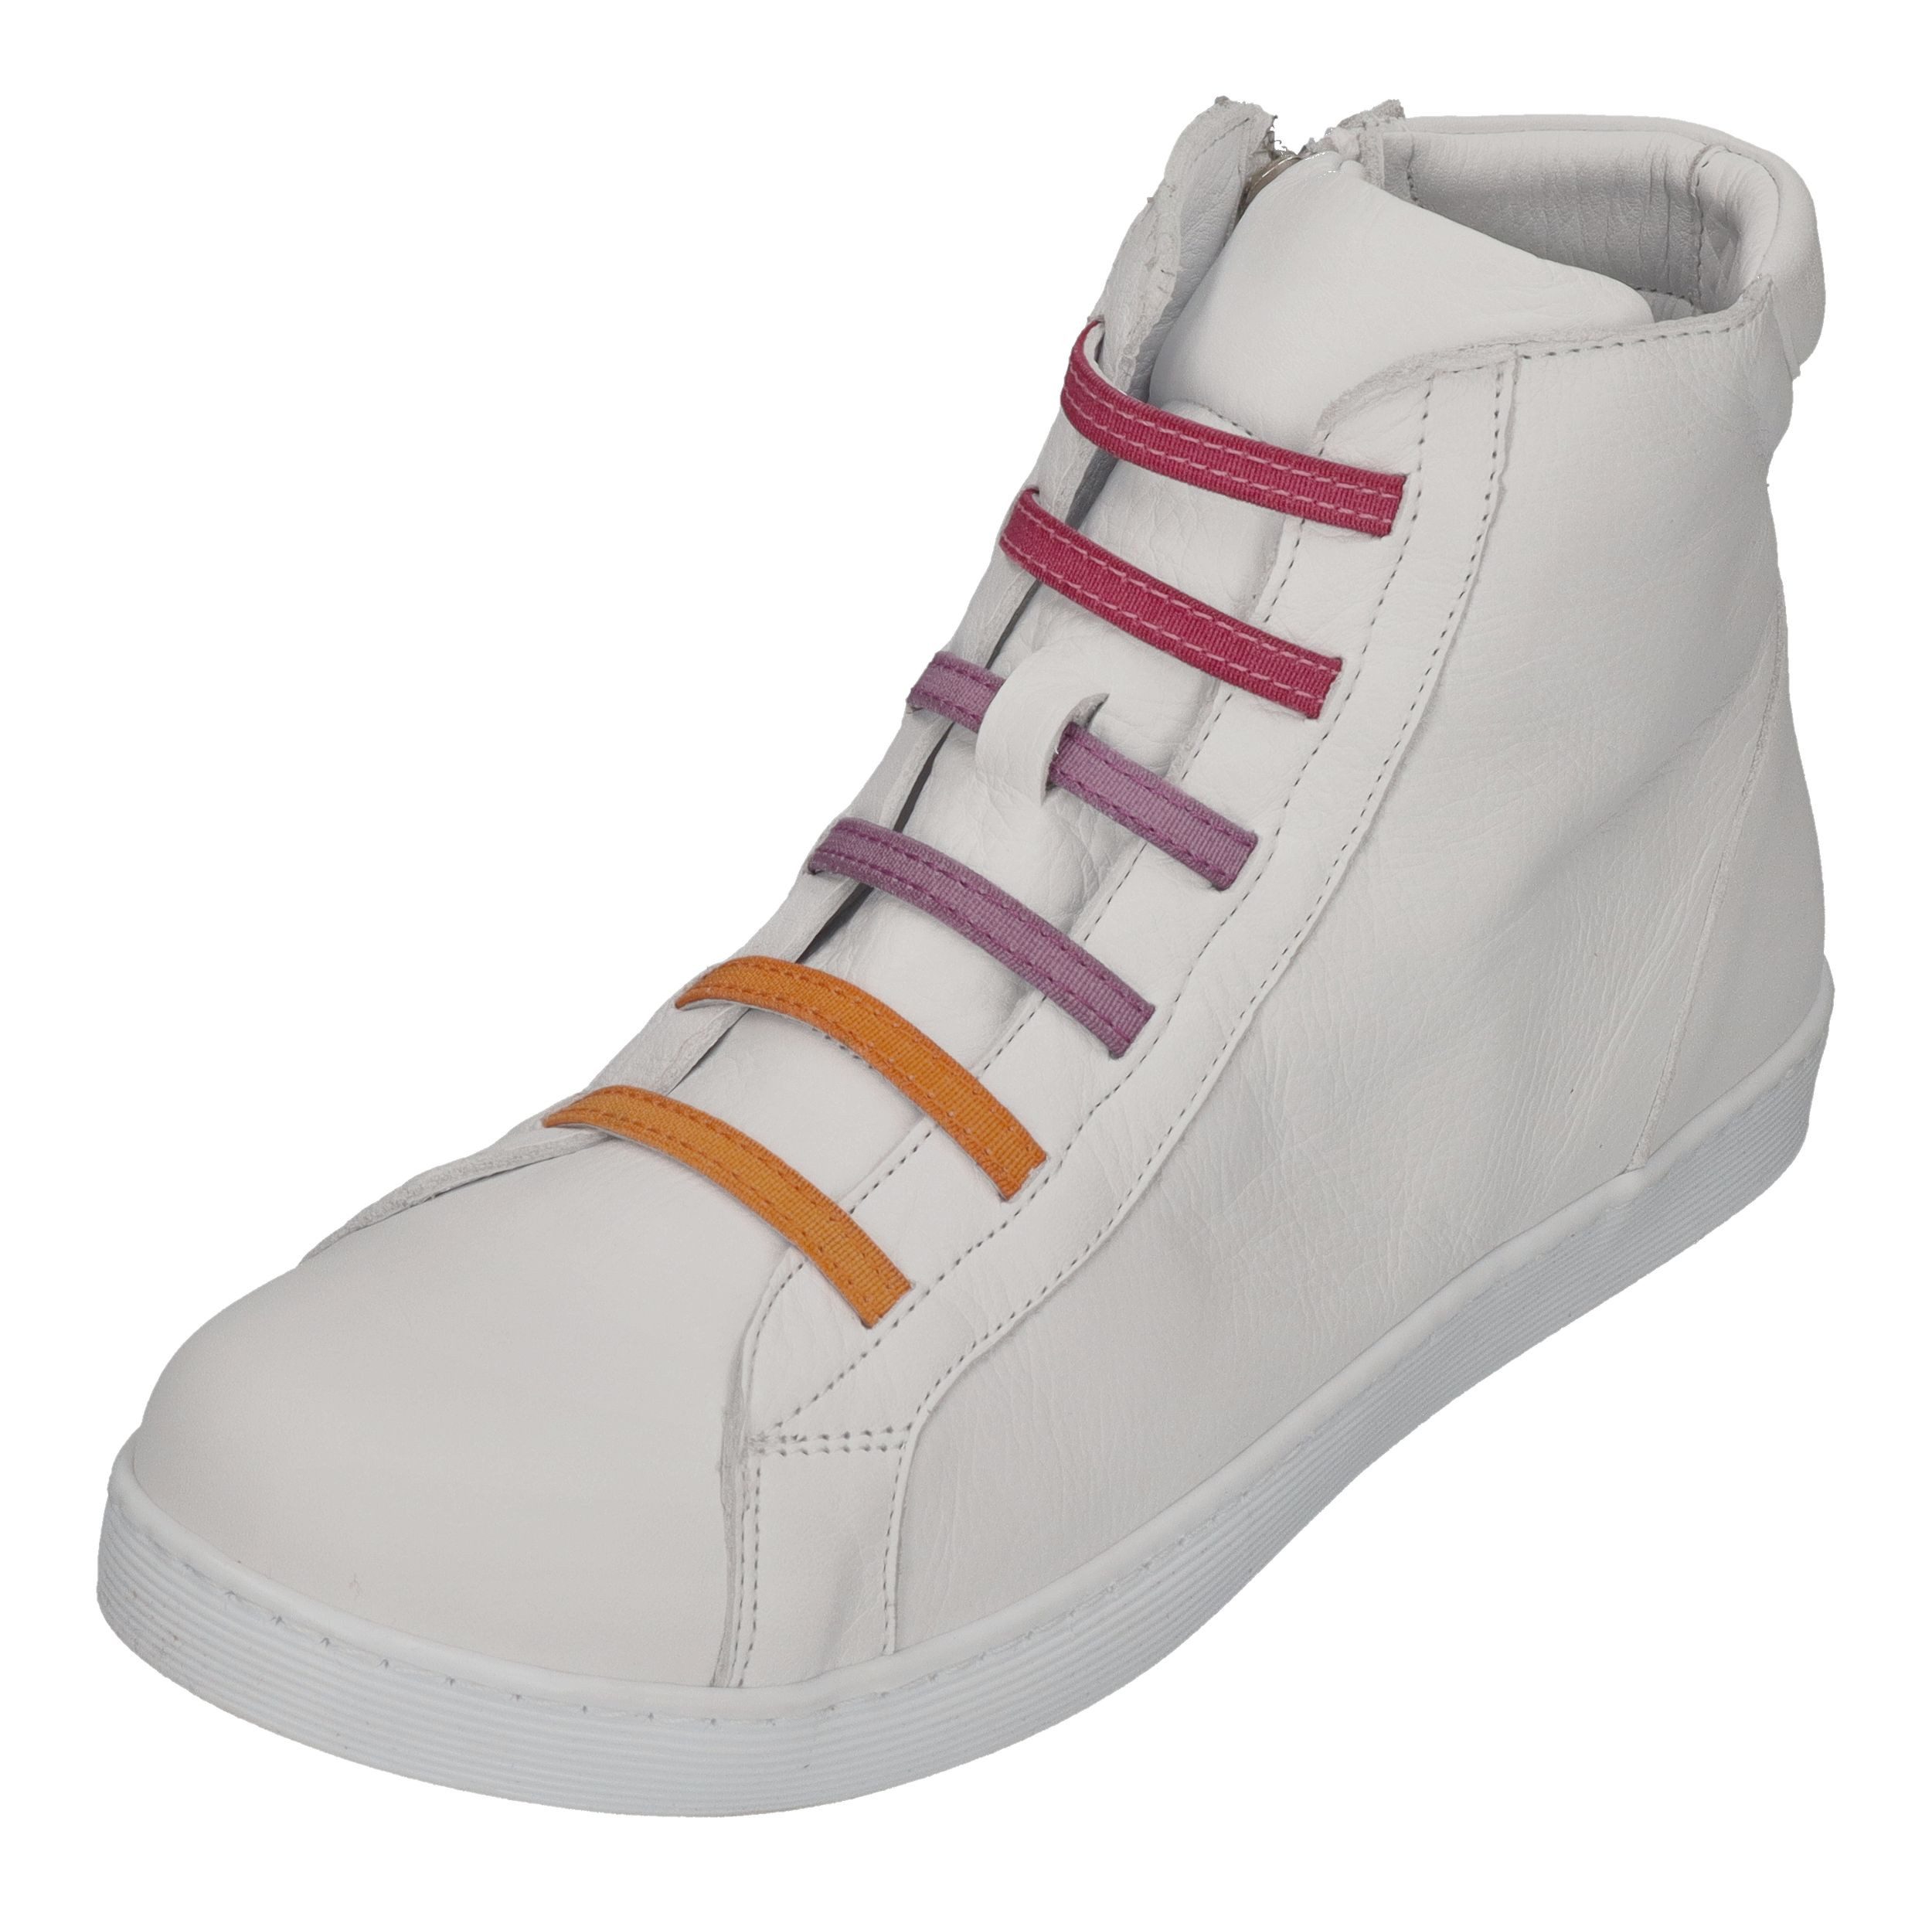 Andrea Conti 0062801 Sneaker Weiß Weiß Kombi